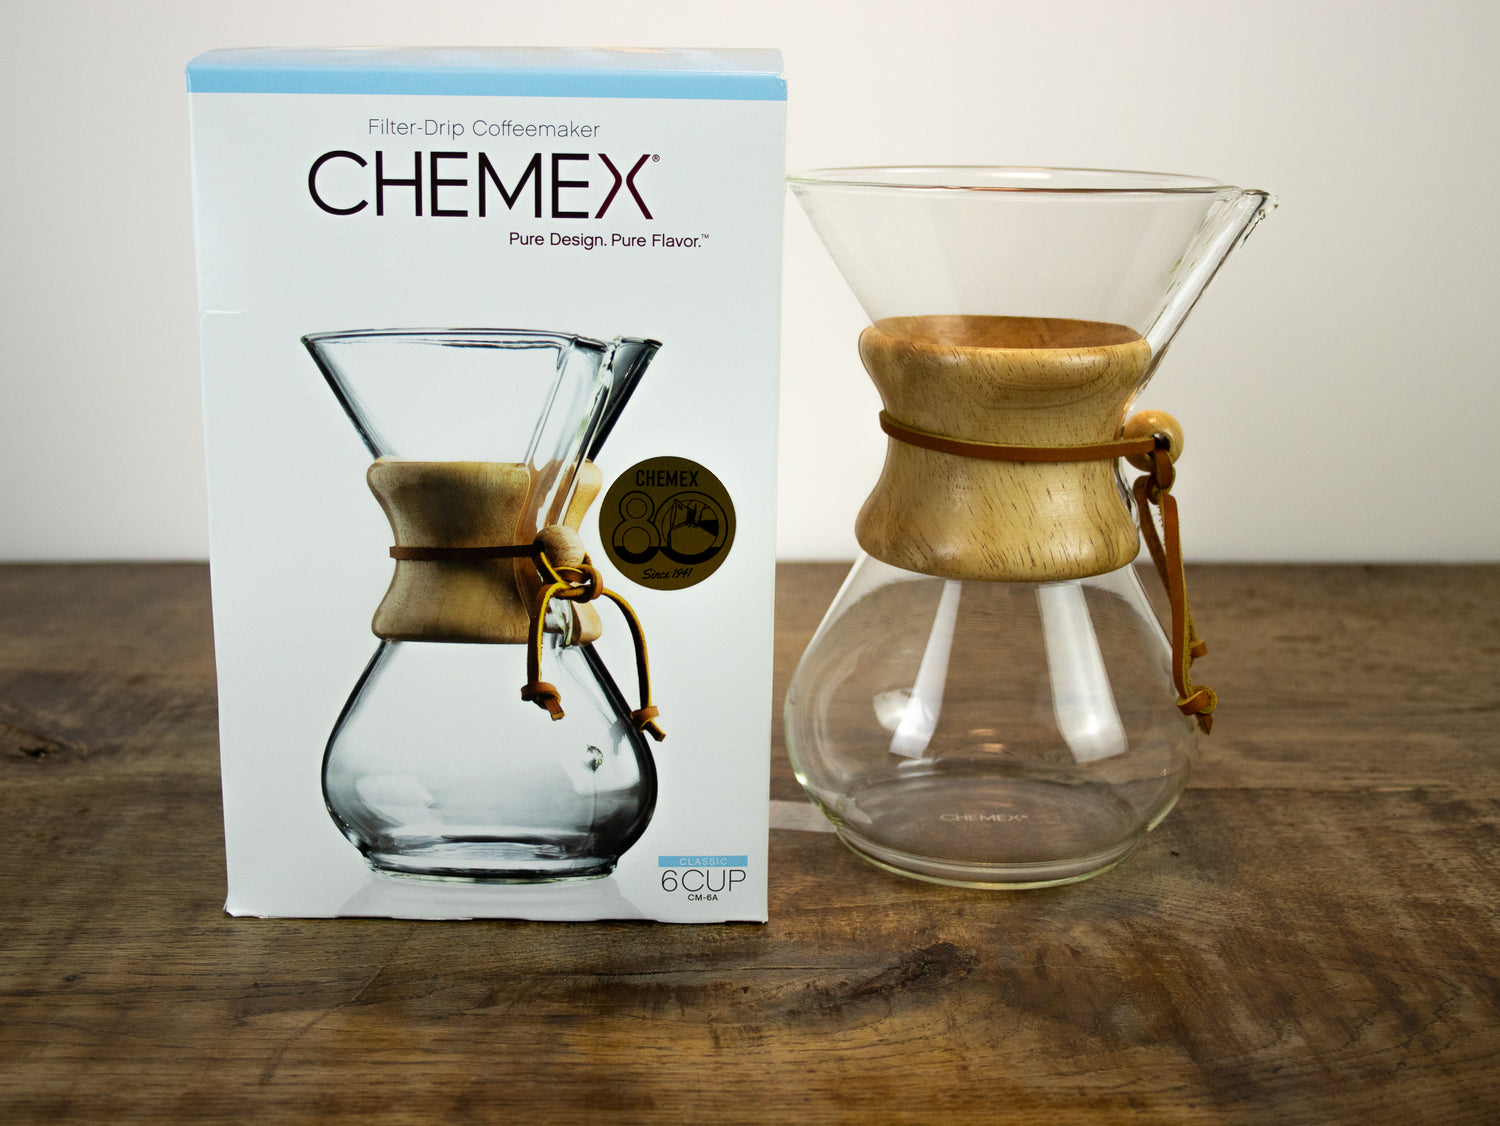 Chemex Coffeemaker, Filter-Drip, Classic, 6 Cup